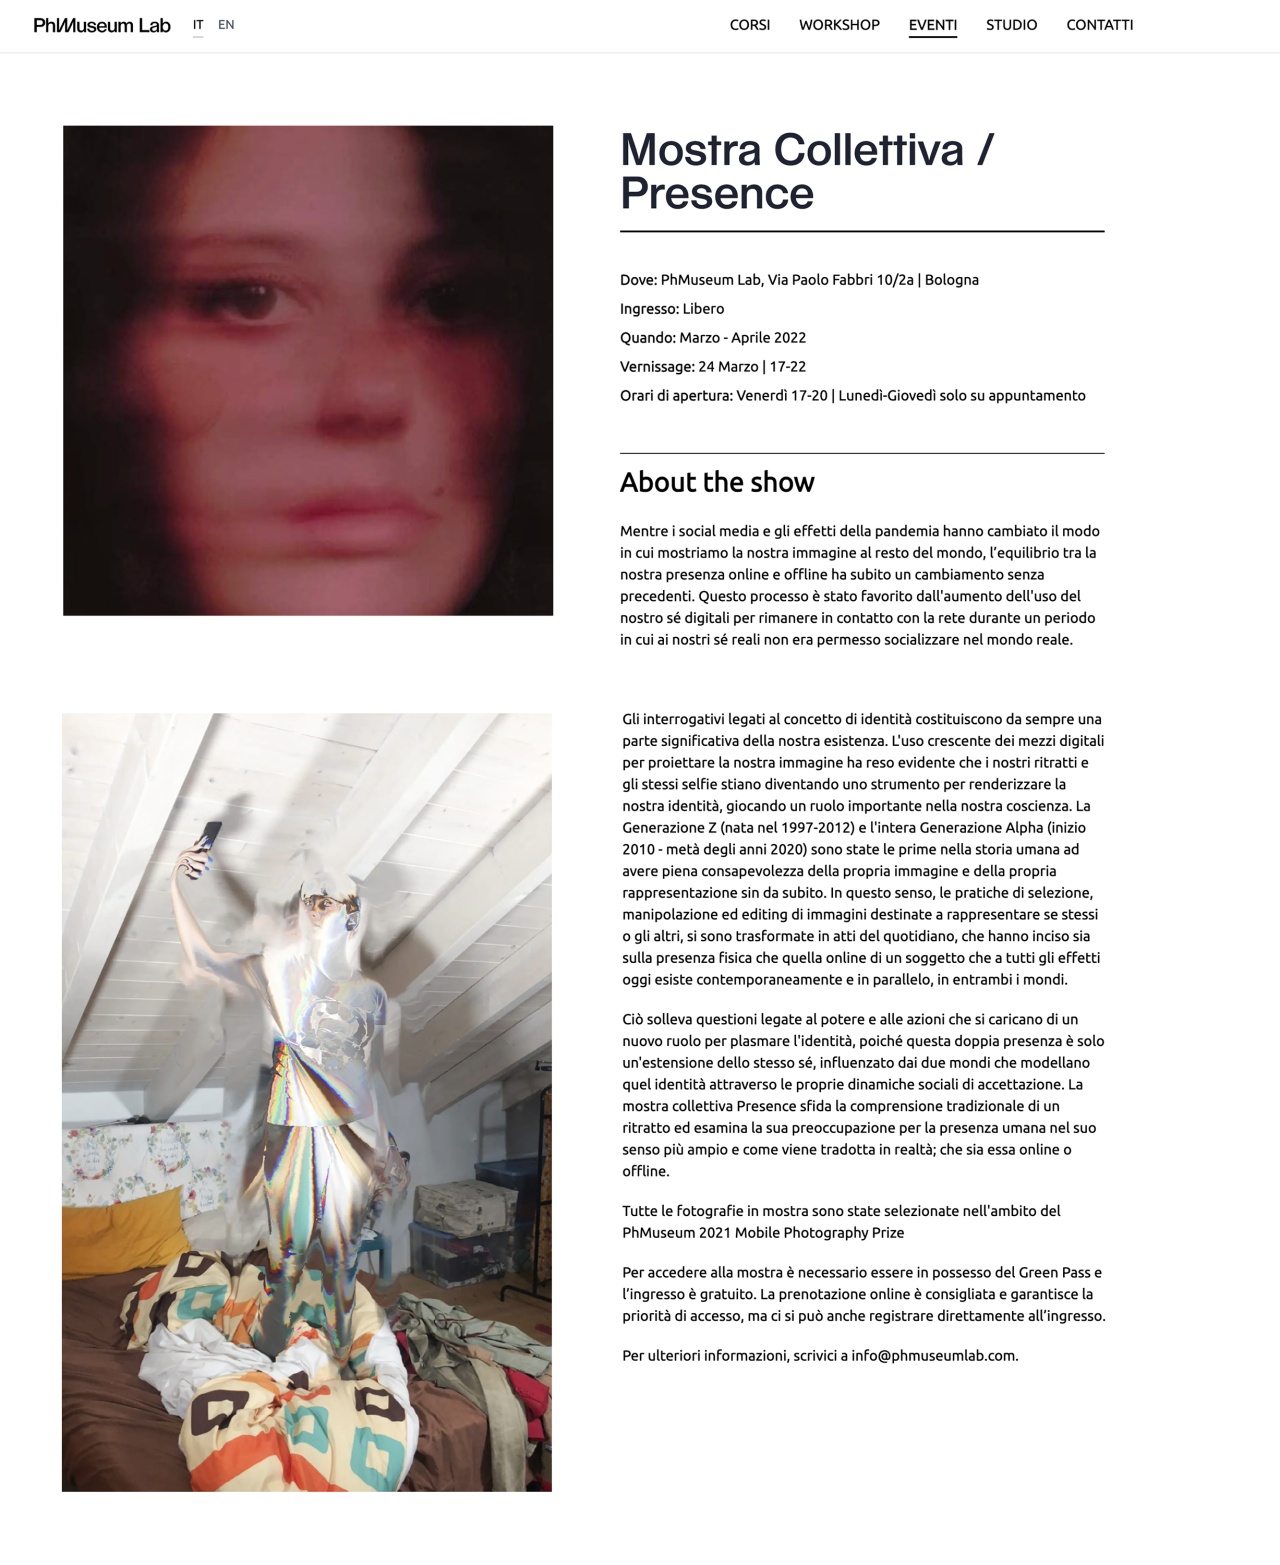 Presence__Ph_Museum_lab___Bologna_2022.jpg